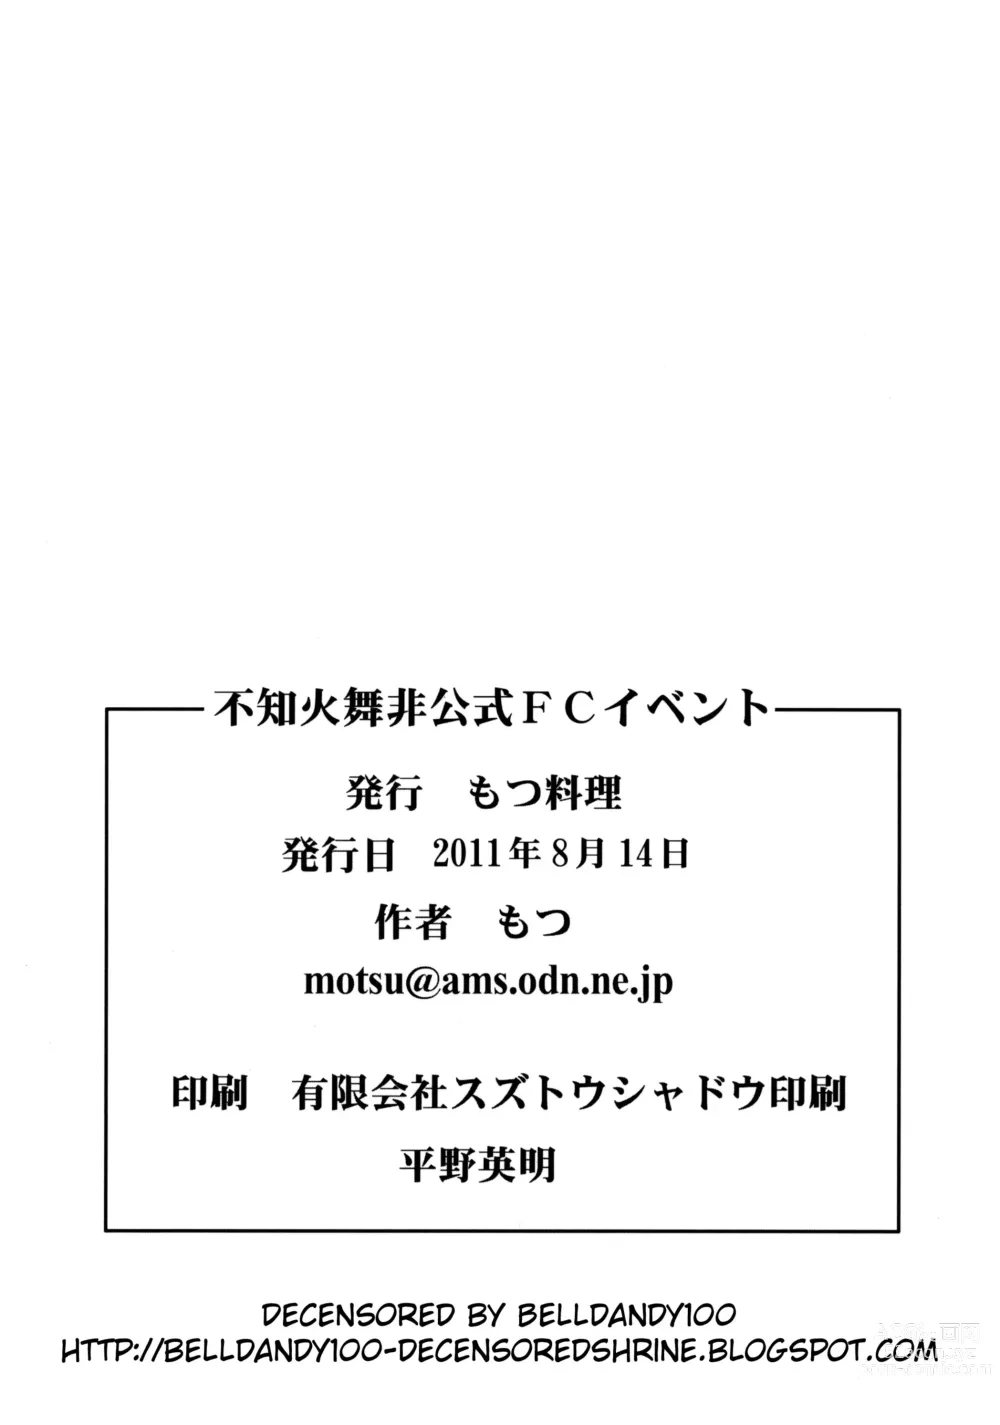 Page 25 of doujinshi Shiranui Mai Hikoushiki FC Event (decensored)